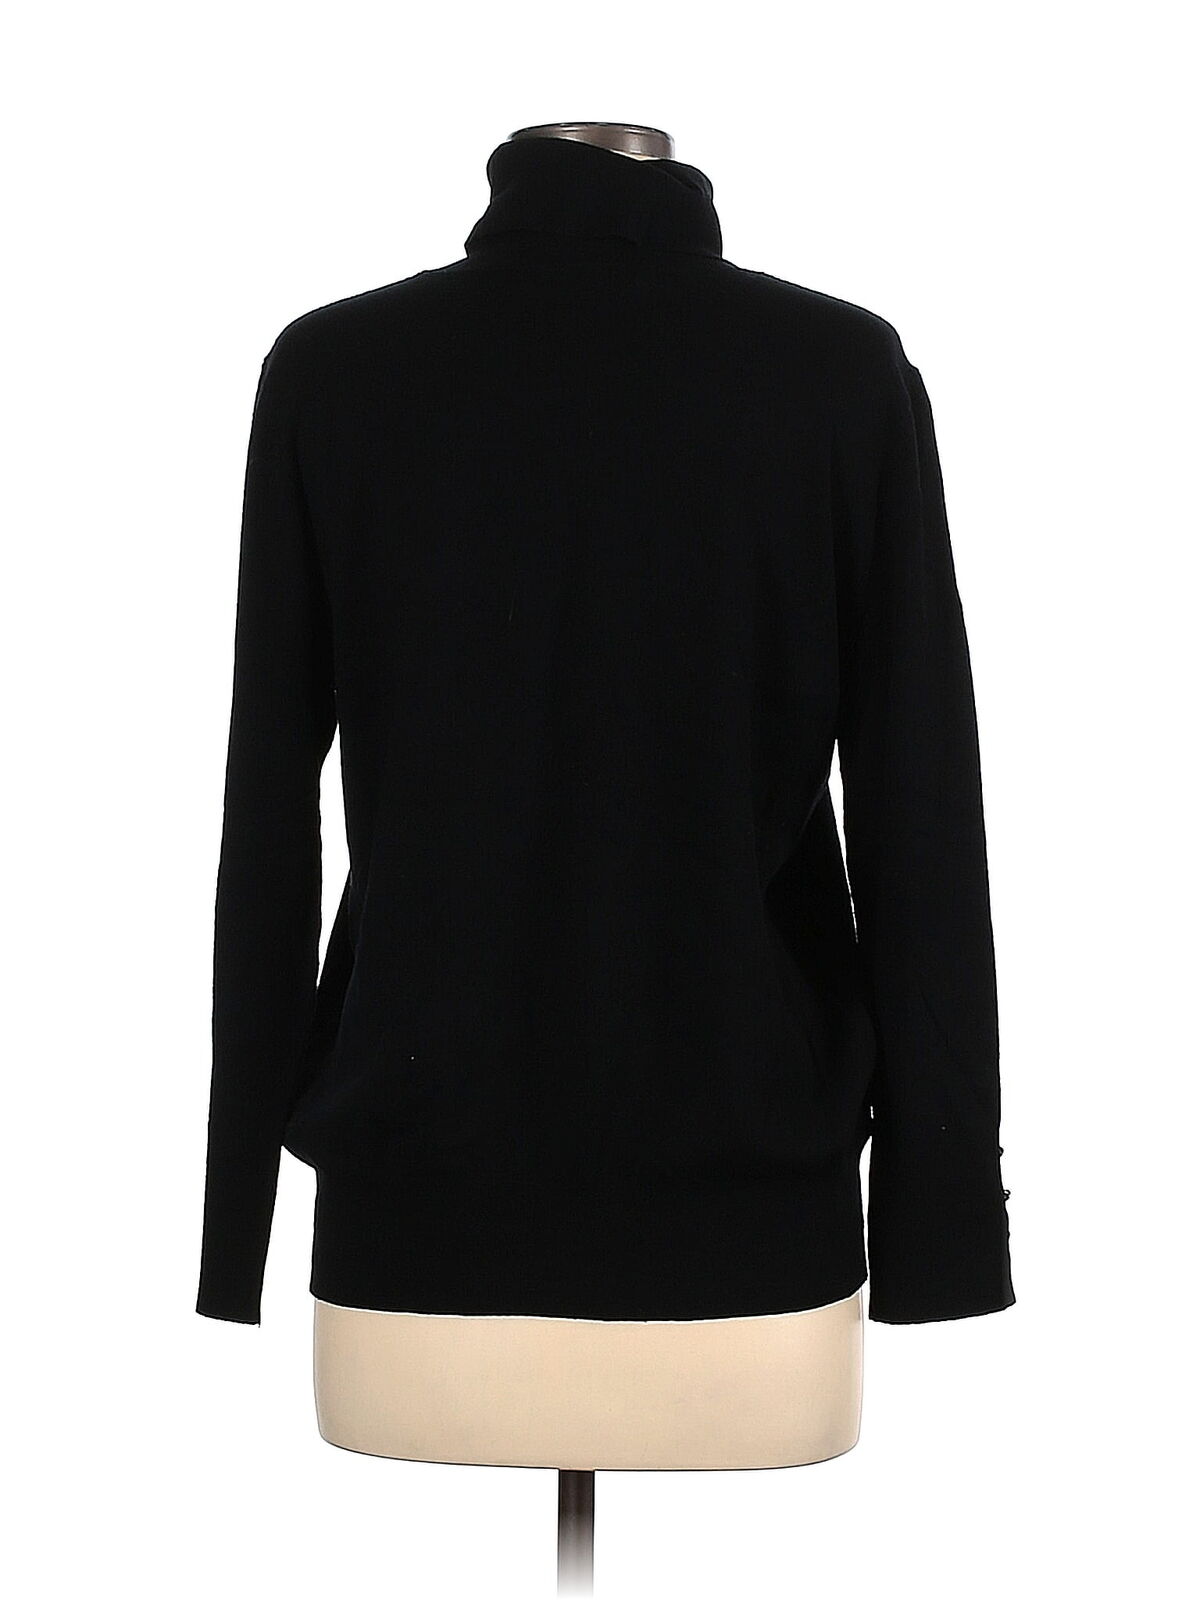 Violetta Women Black Turtleneck Sweater M | eBay